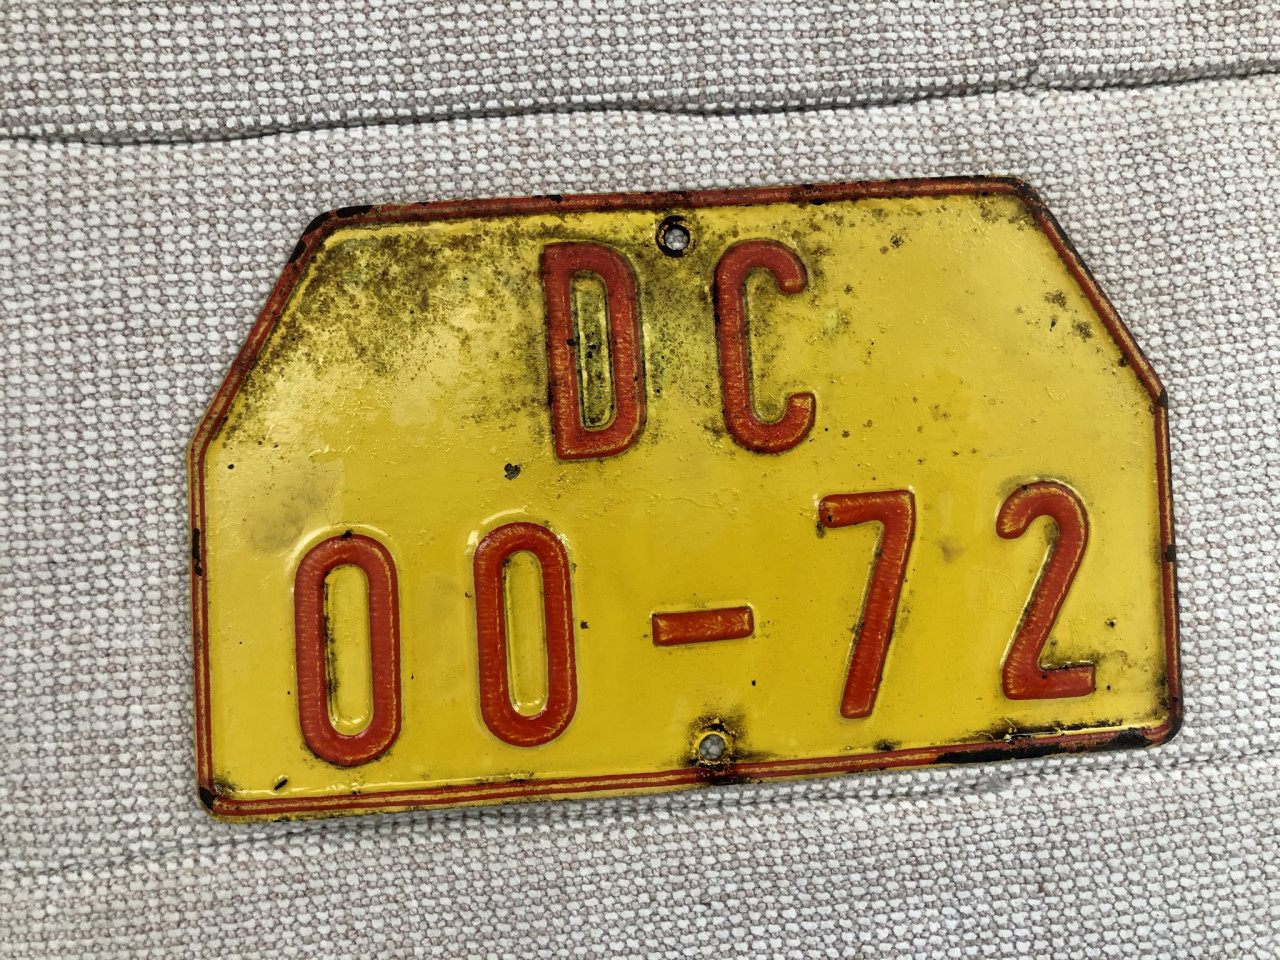 DC 00-72